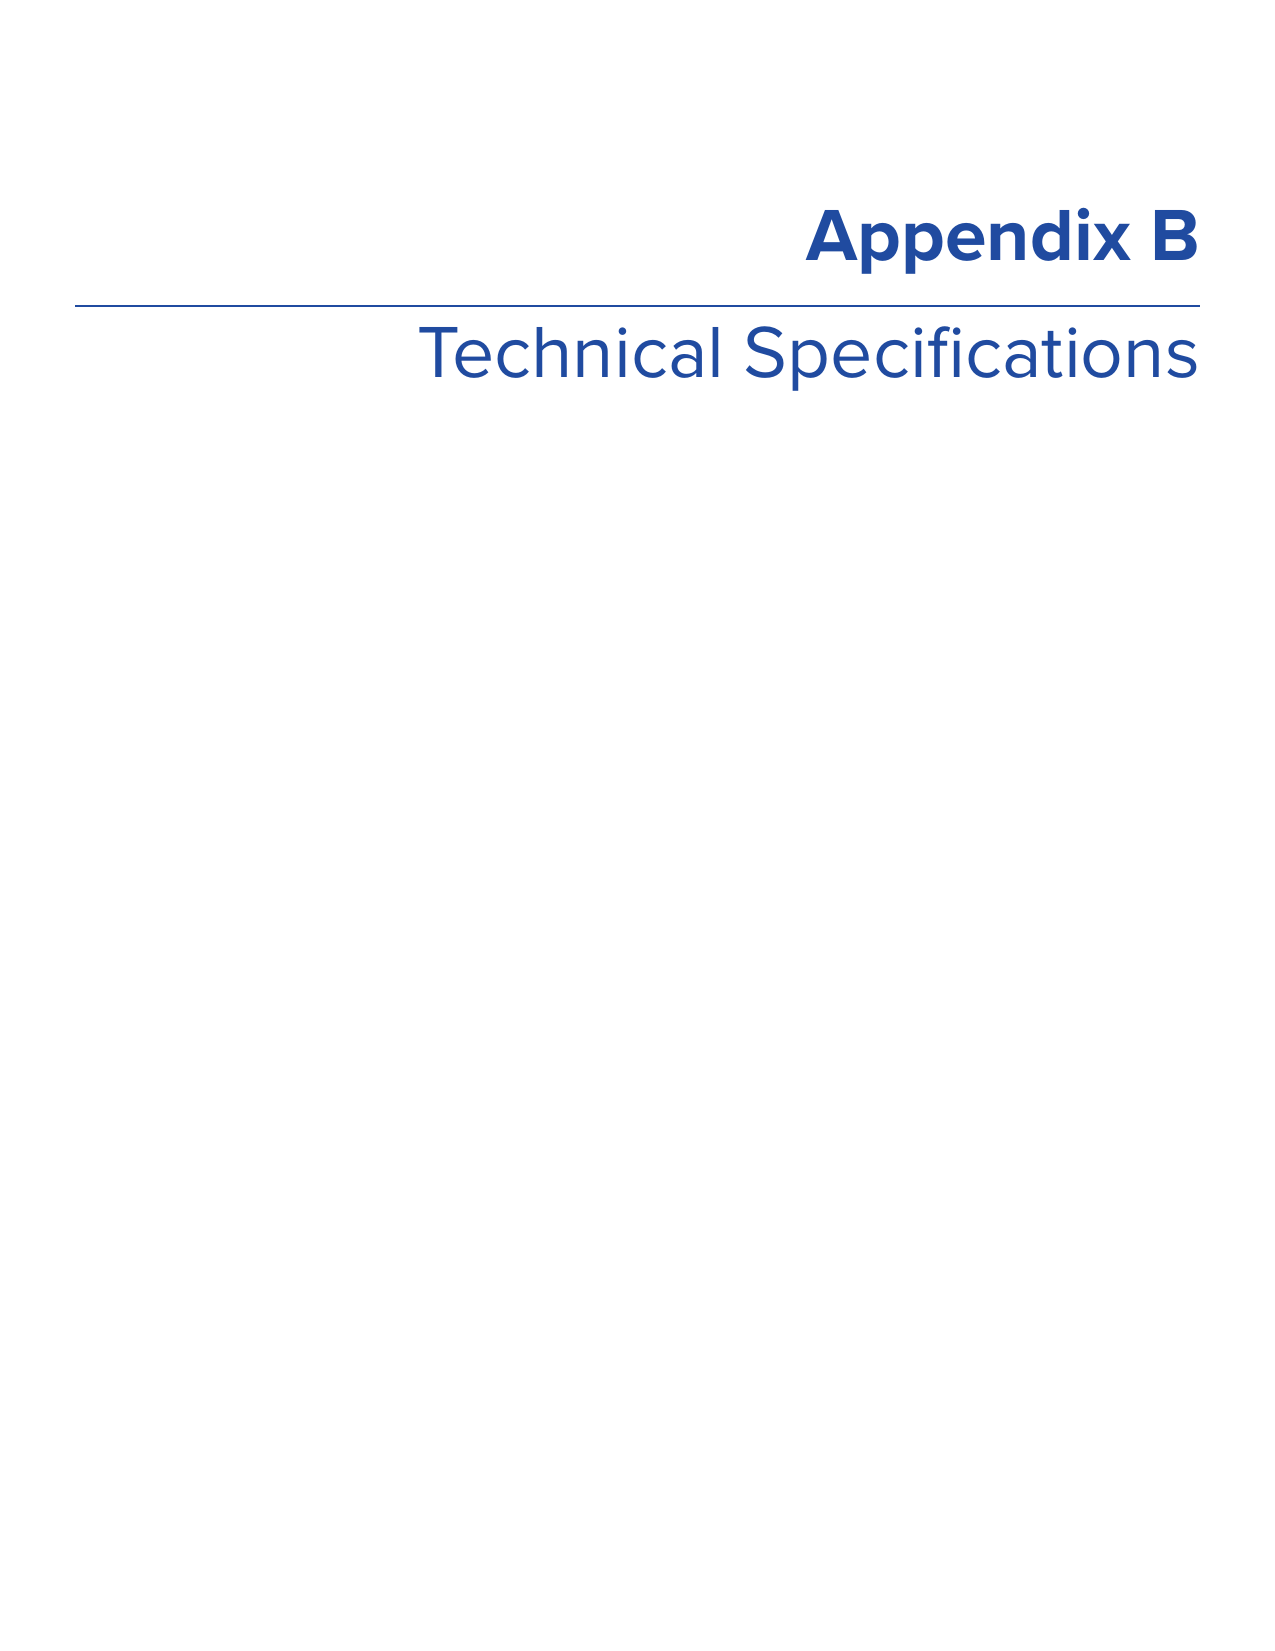 Technical SpeciﬁcationsAppendix B